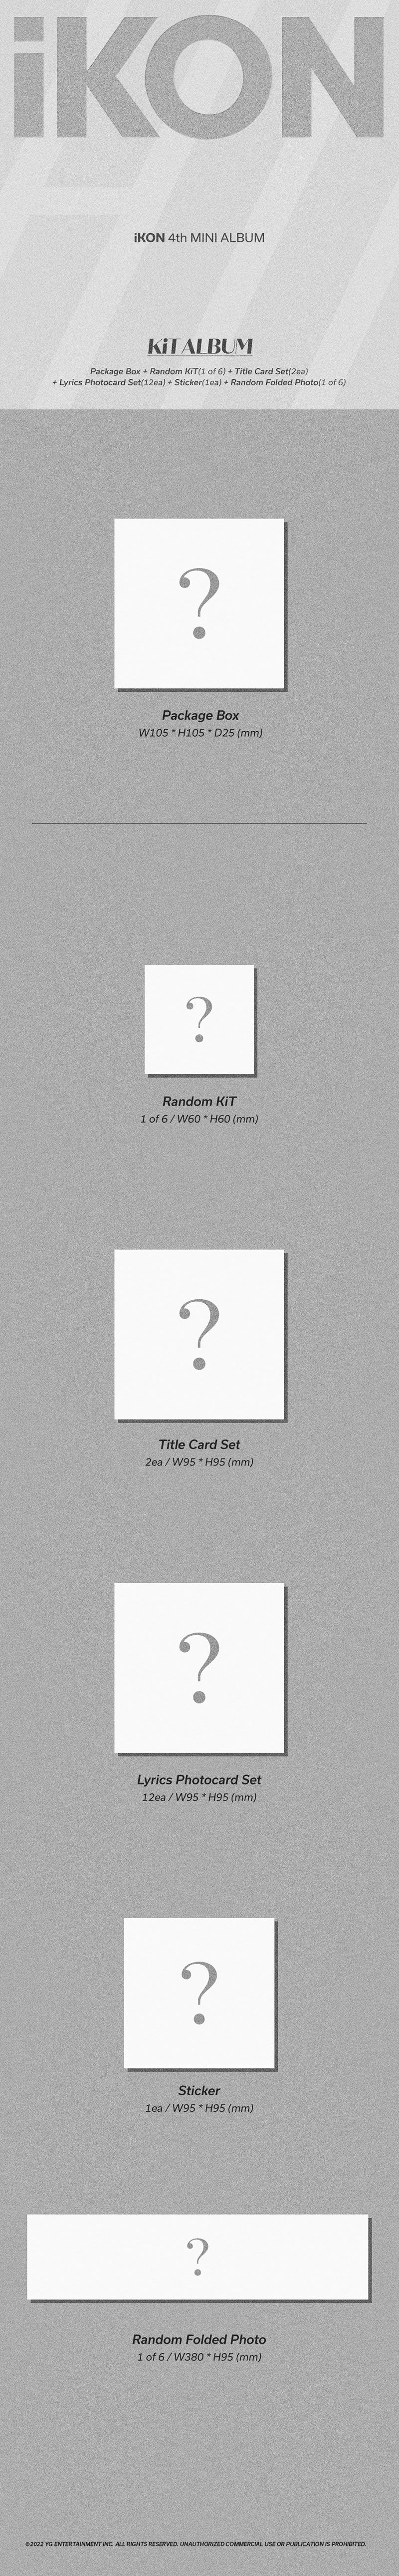 iKON - FLASHBACK (الألبوم الرابع الصغير) KiT